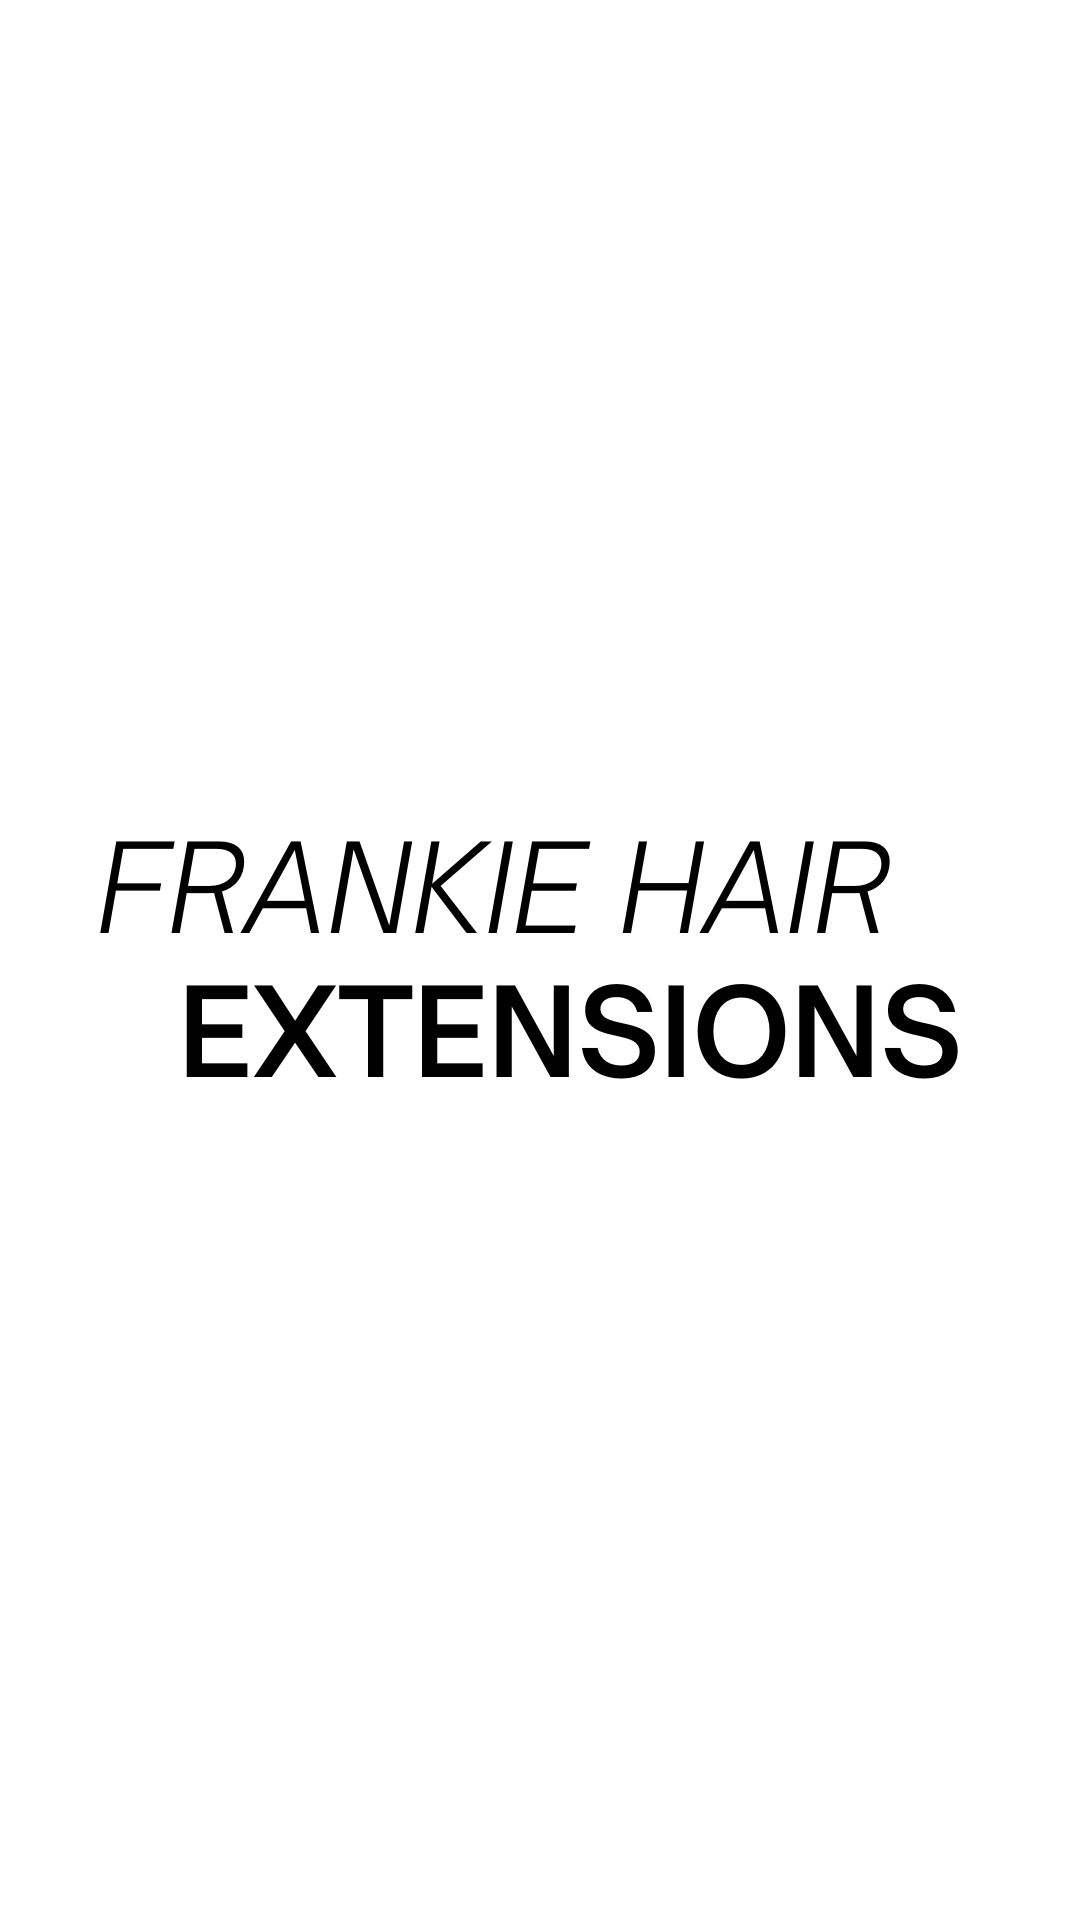 Frankie Hair Extensions